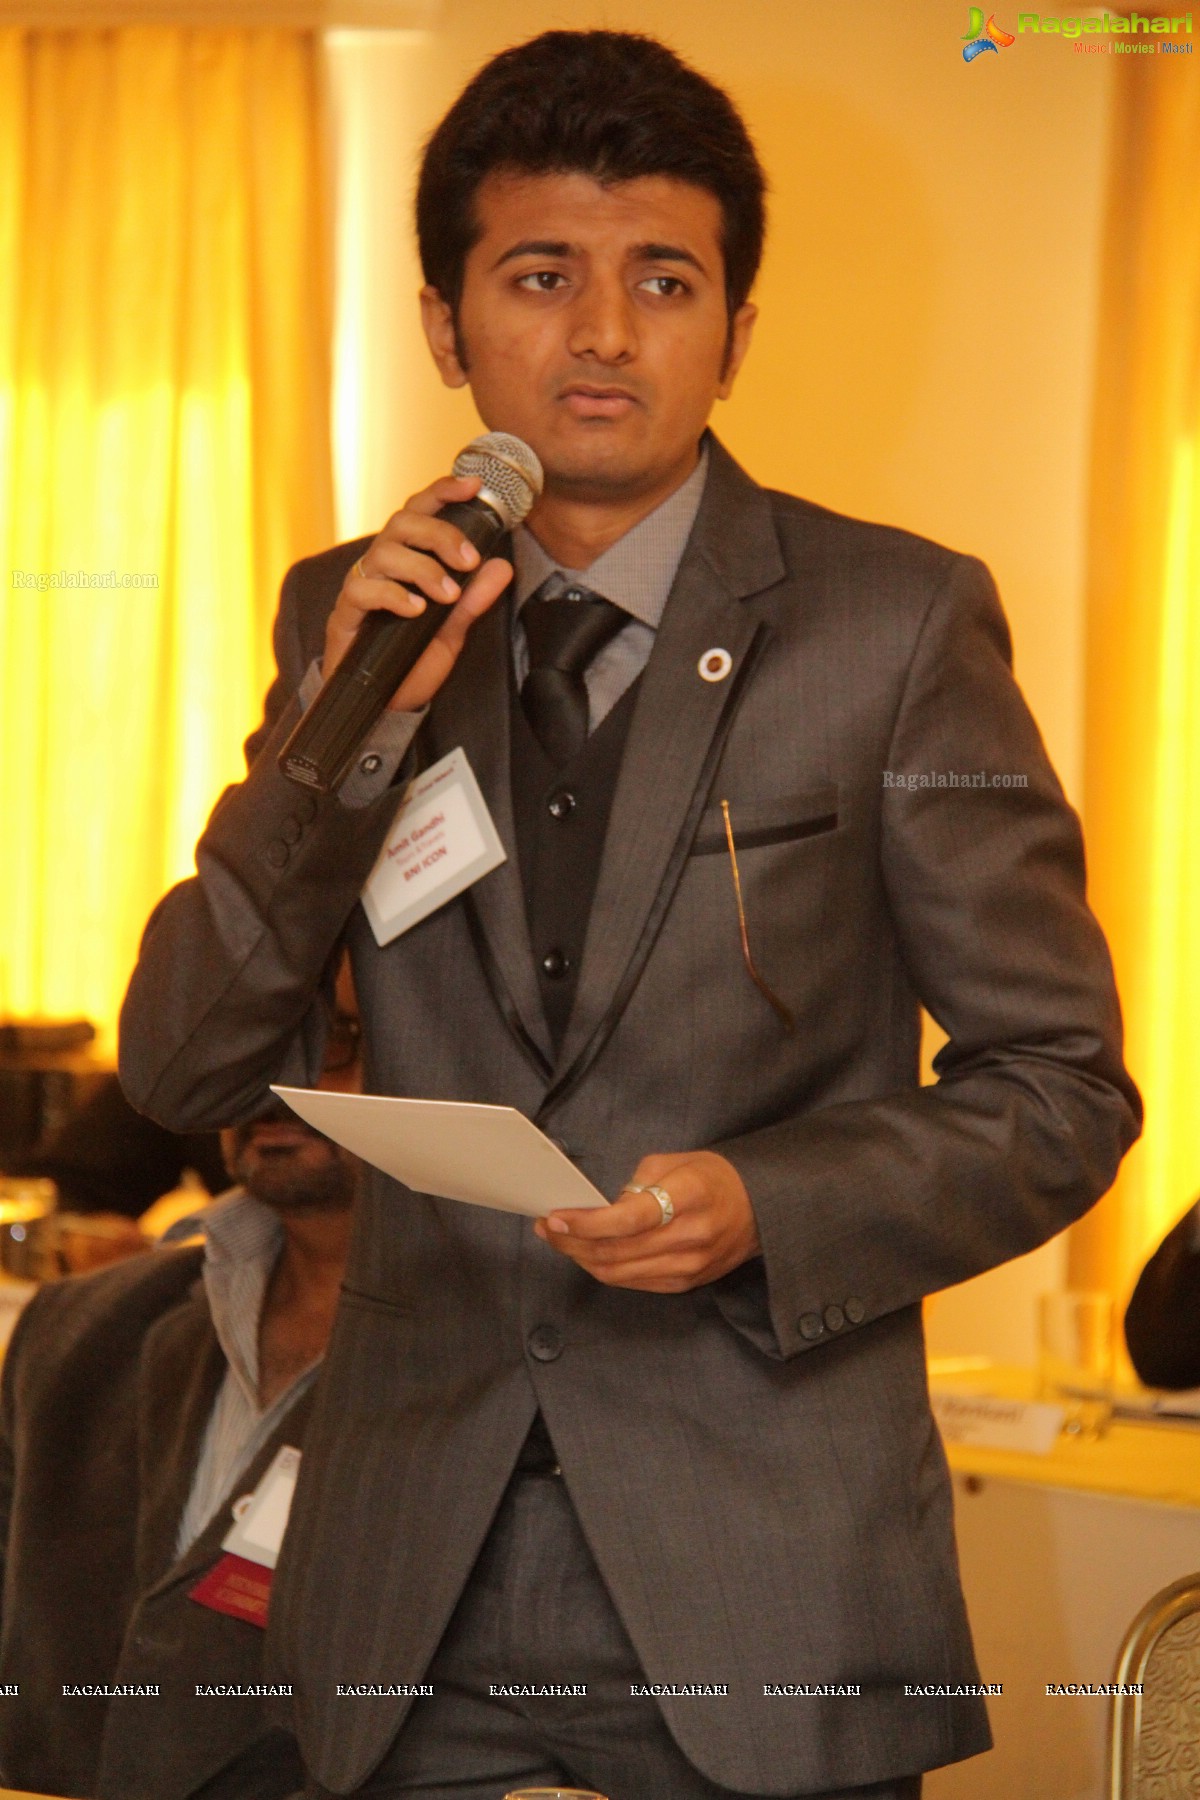 BNI Meet (March 2014), Hyderabad